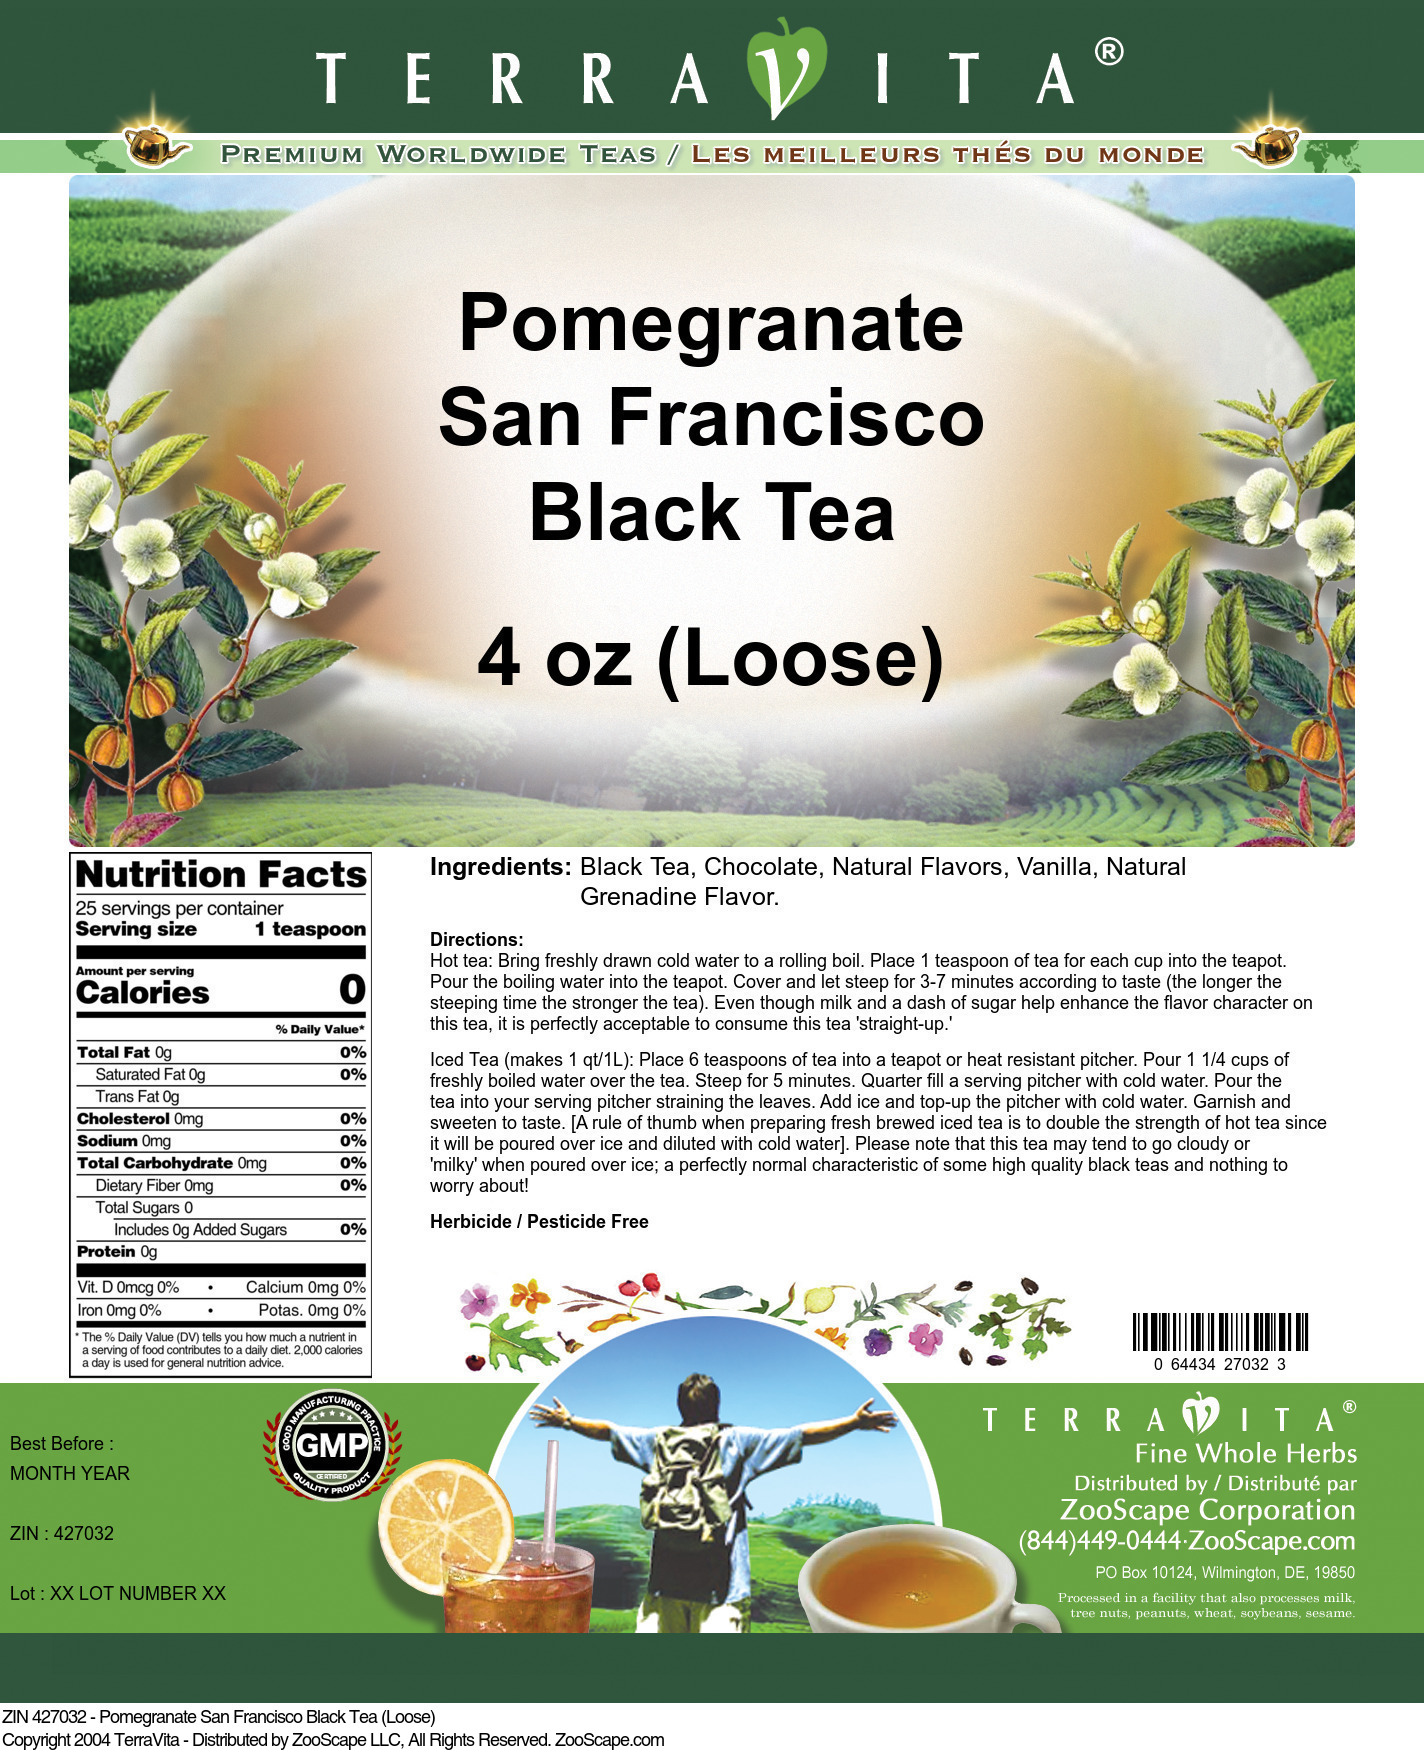 Pomegranate San Francisco Black Tea (Loose) - Label